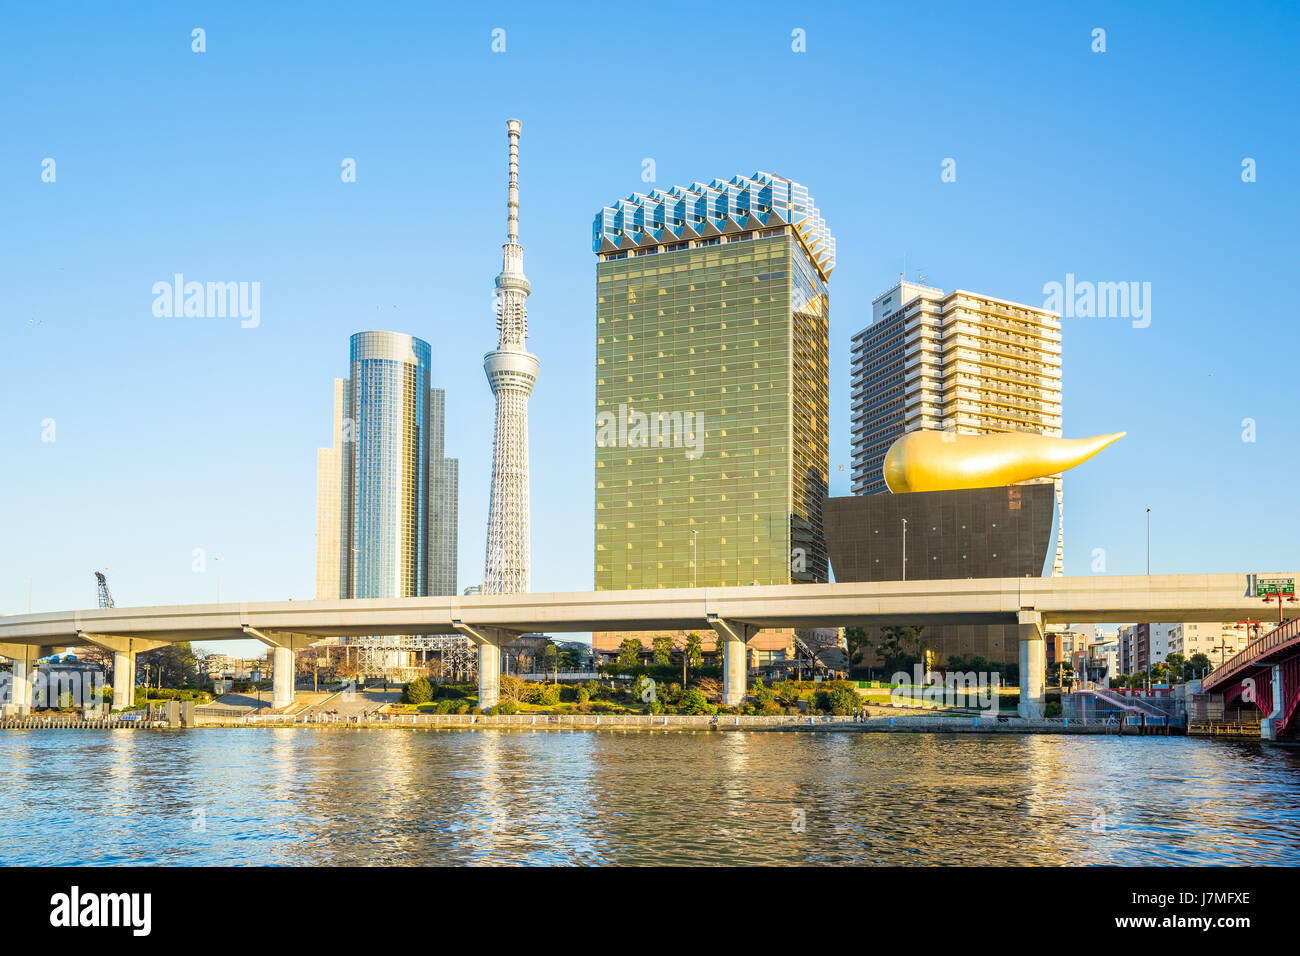 Sumida River with landmark buildings in Tokyo Japan. Stock Photo